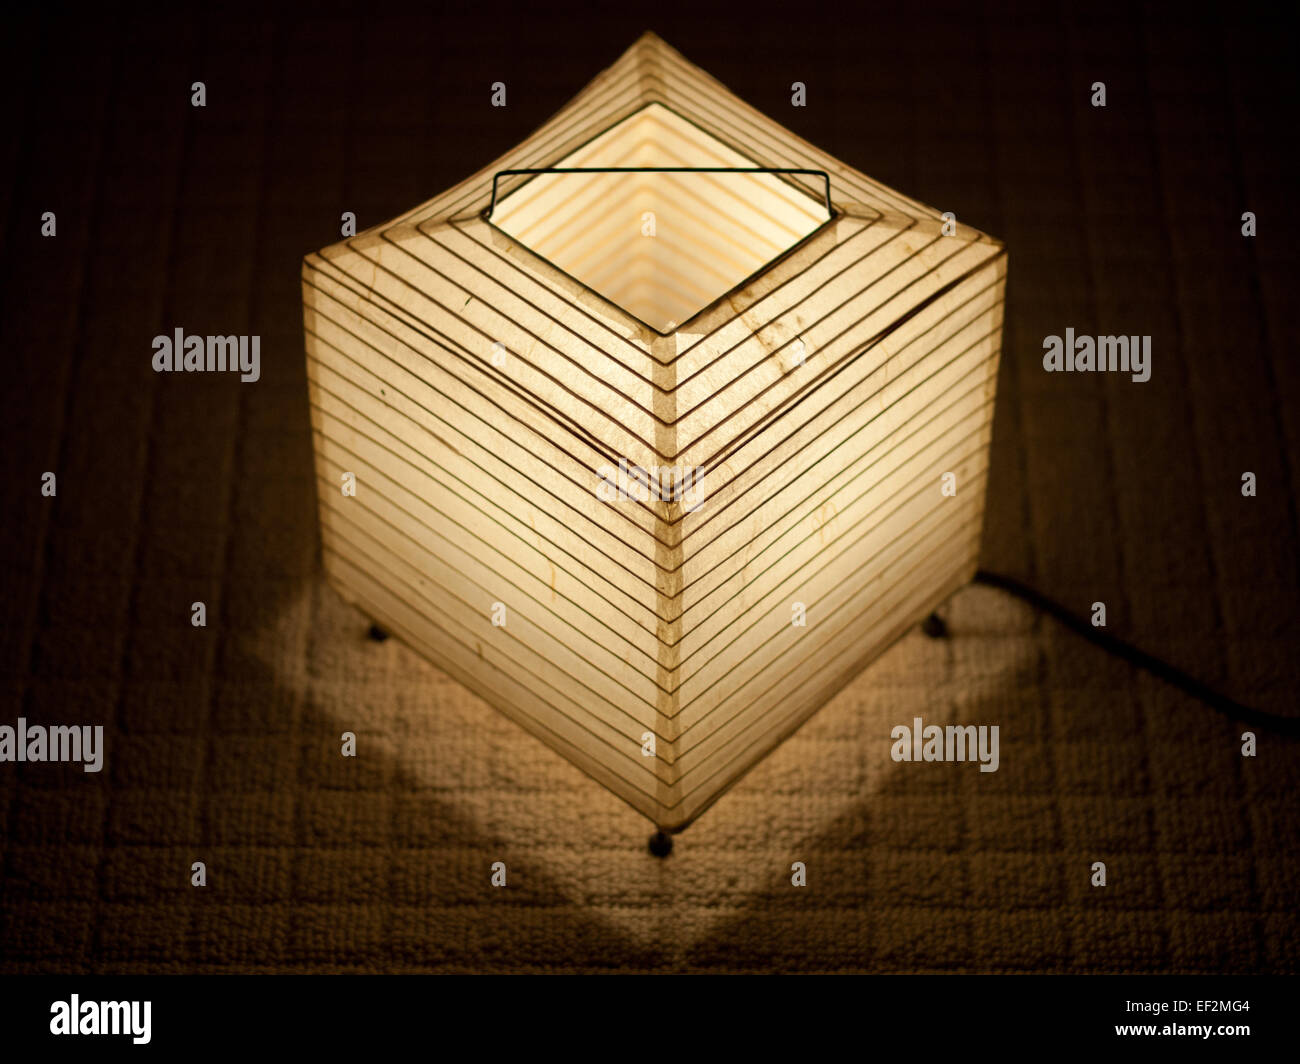 An IKEA Gusle paper lantern Stock Photo - Alamy